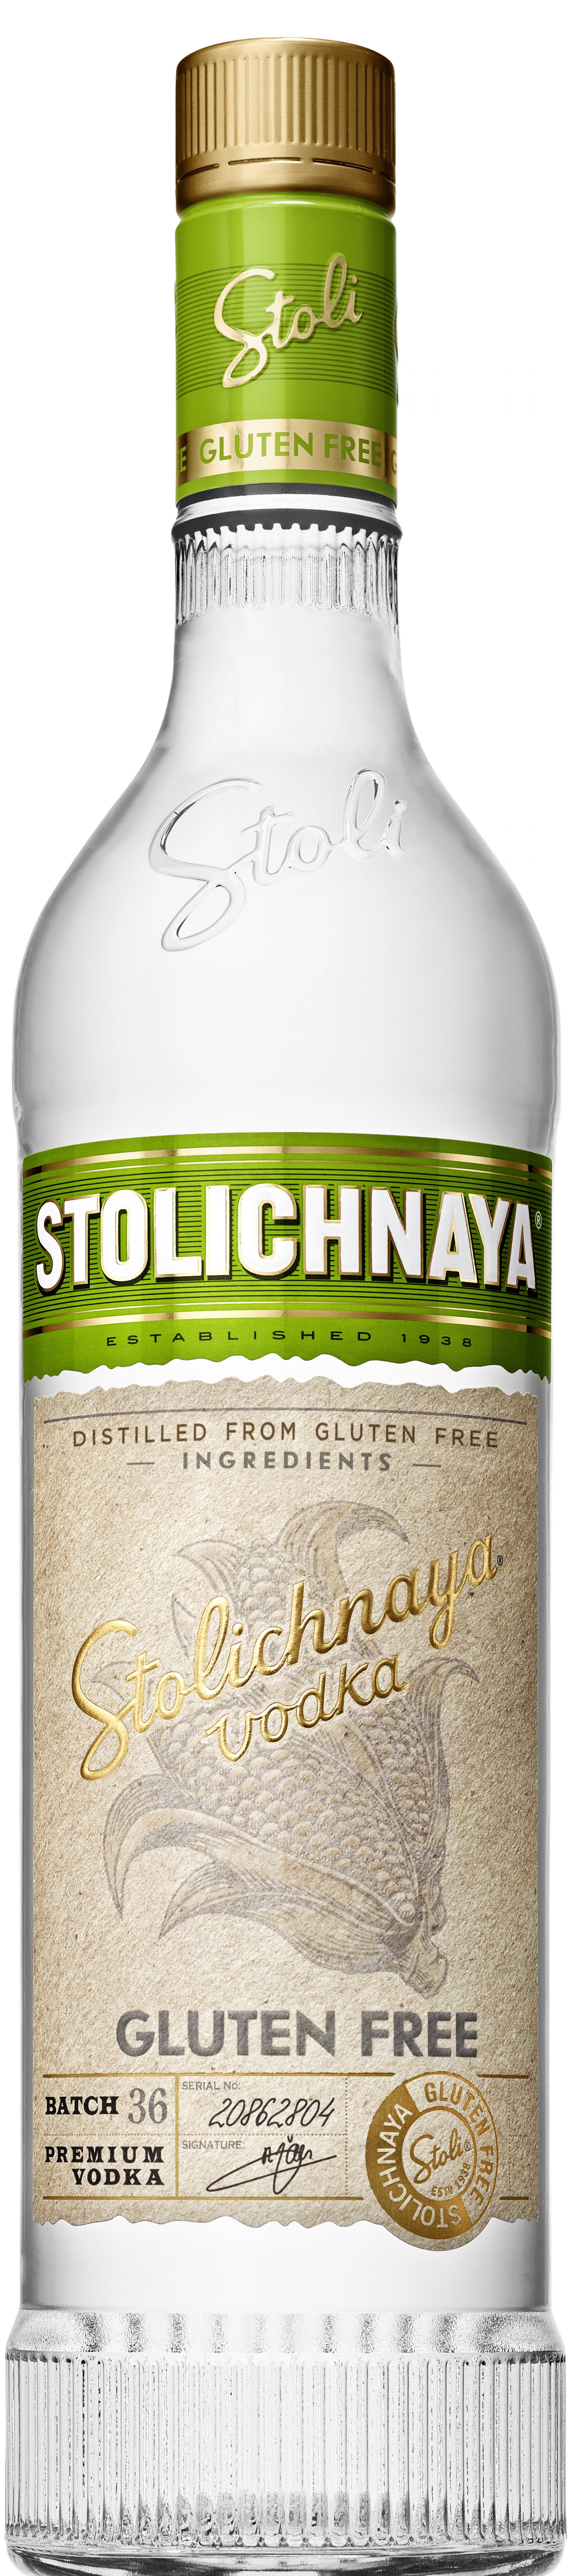 Stoli® Gluten Free Vodka (750 mL), $19.99